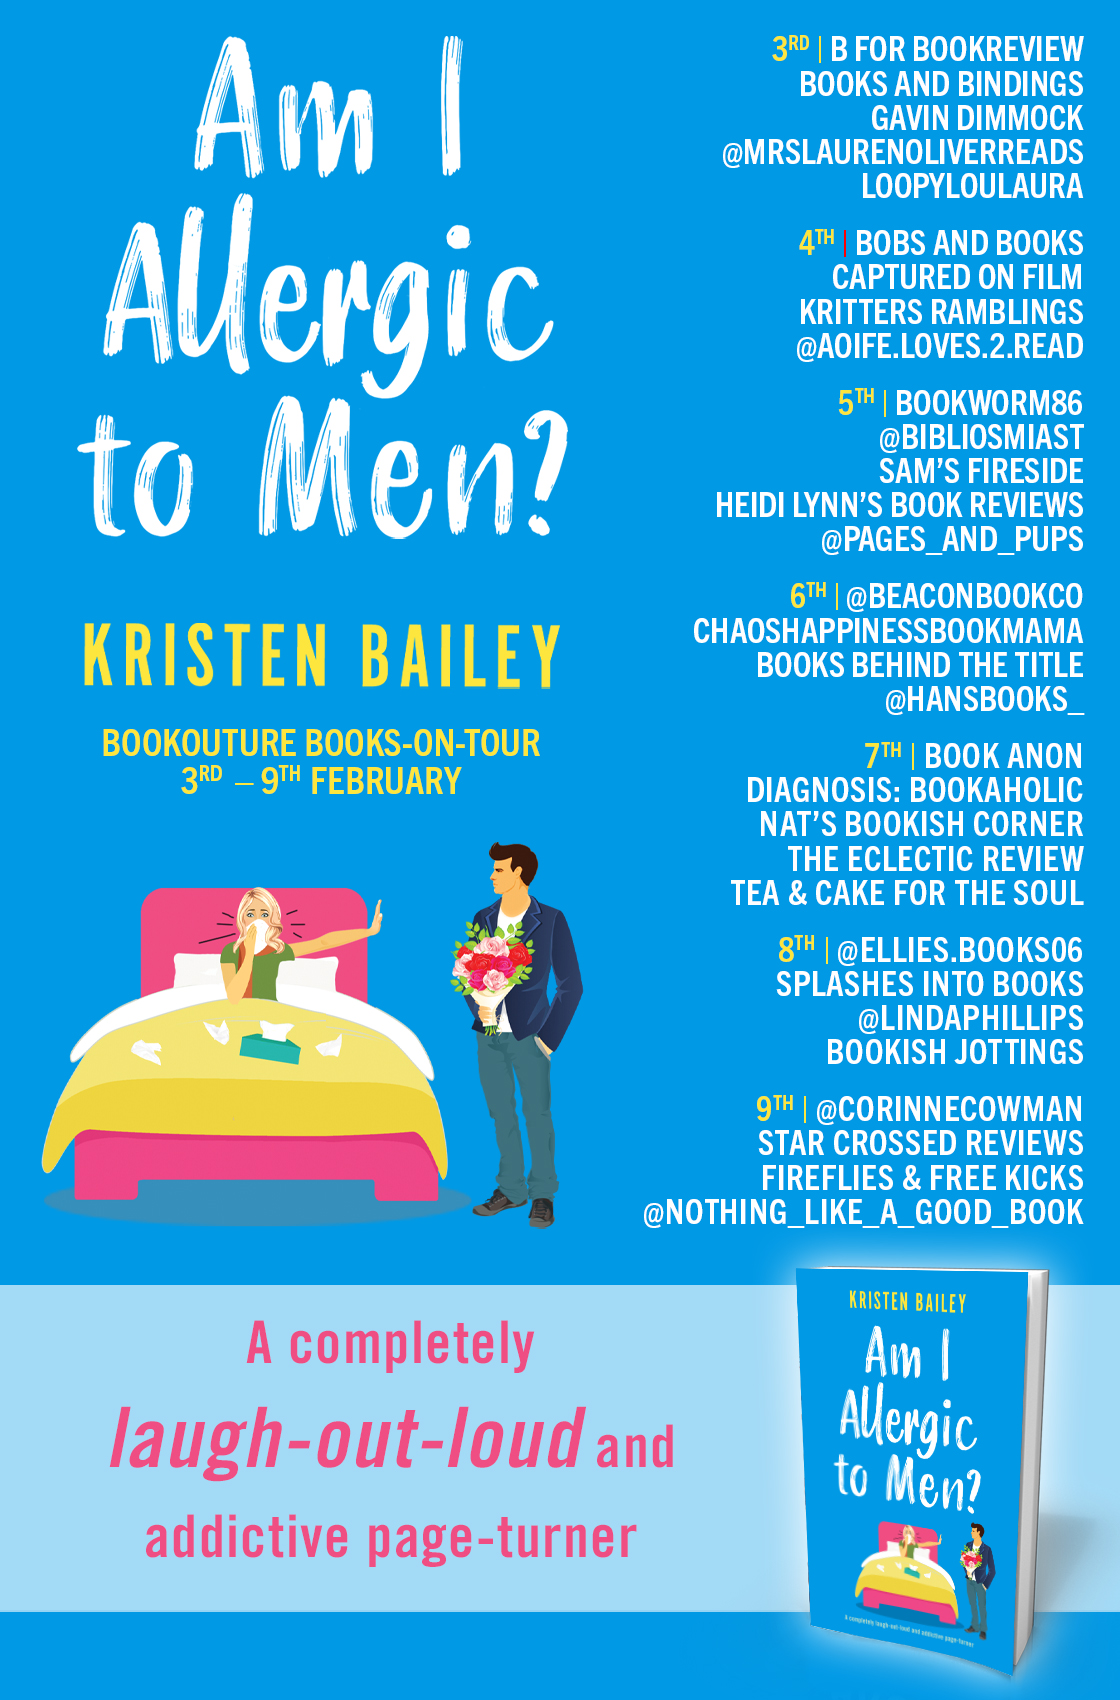 Am I Allergic To Men? blog tour banner